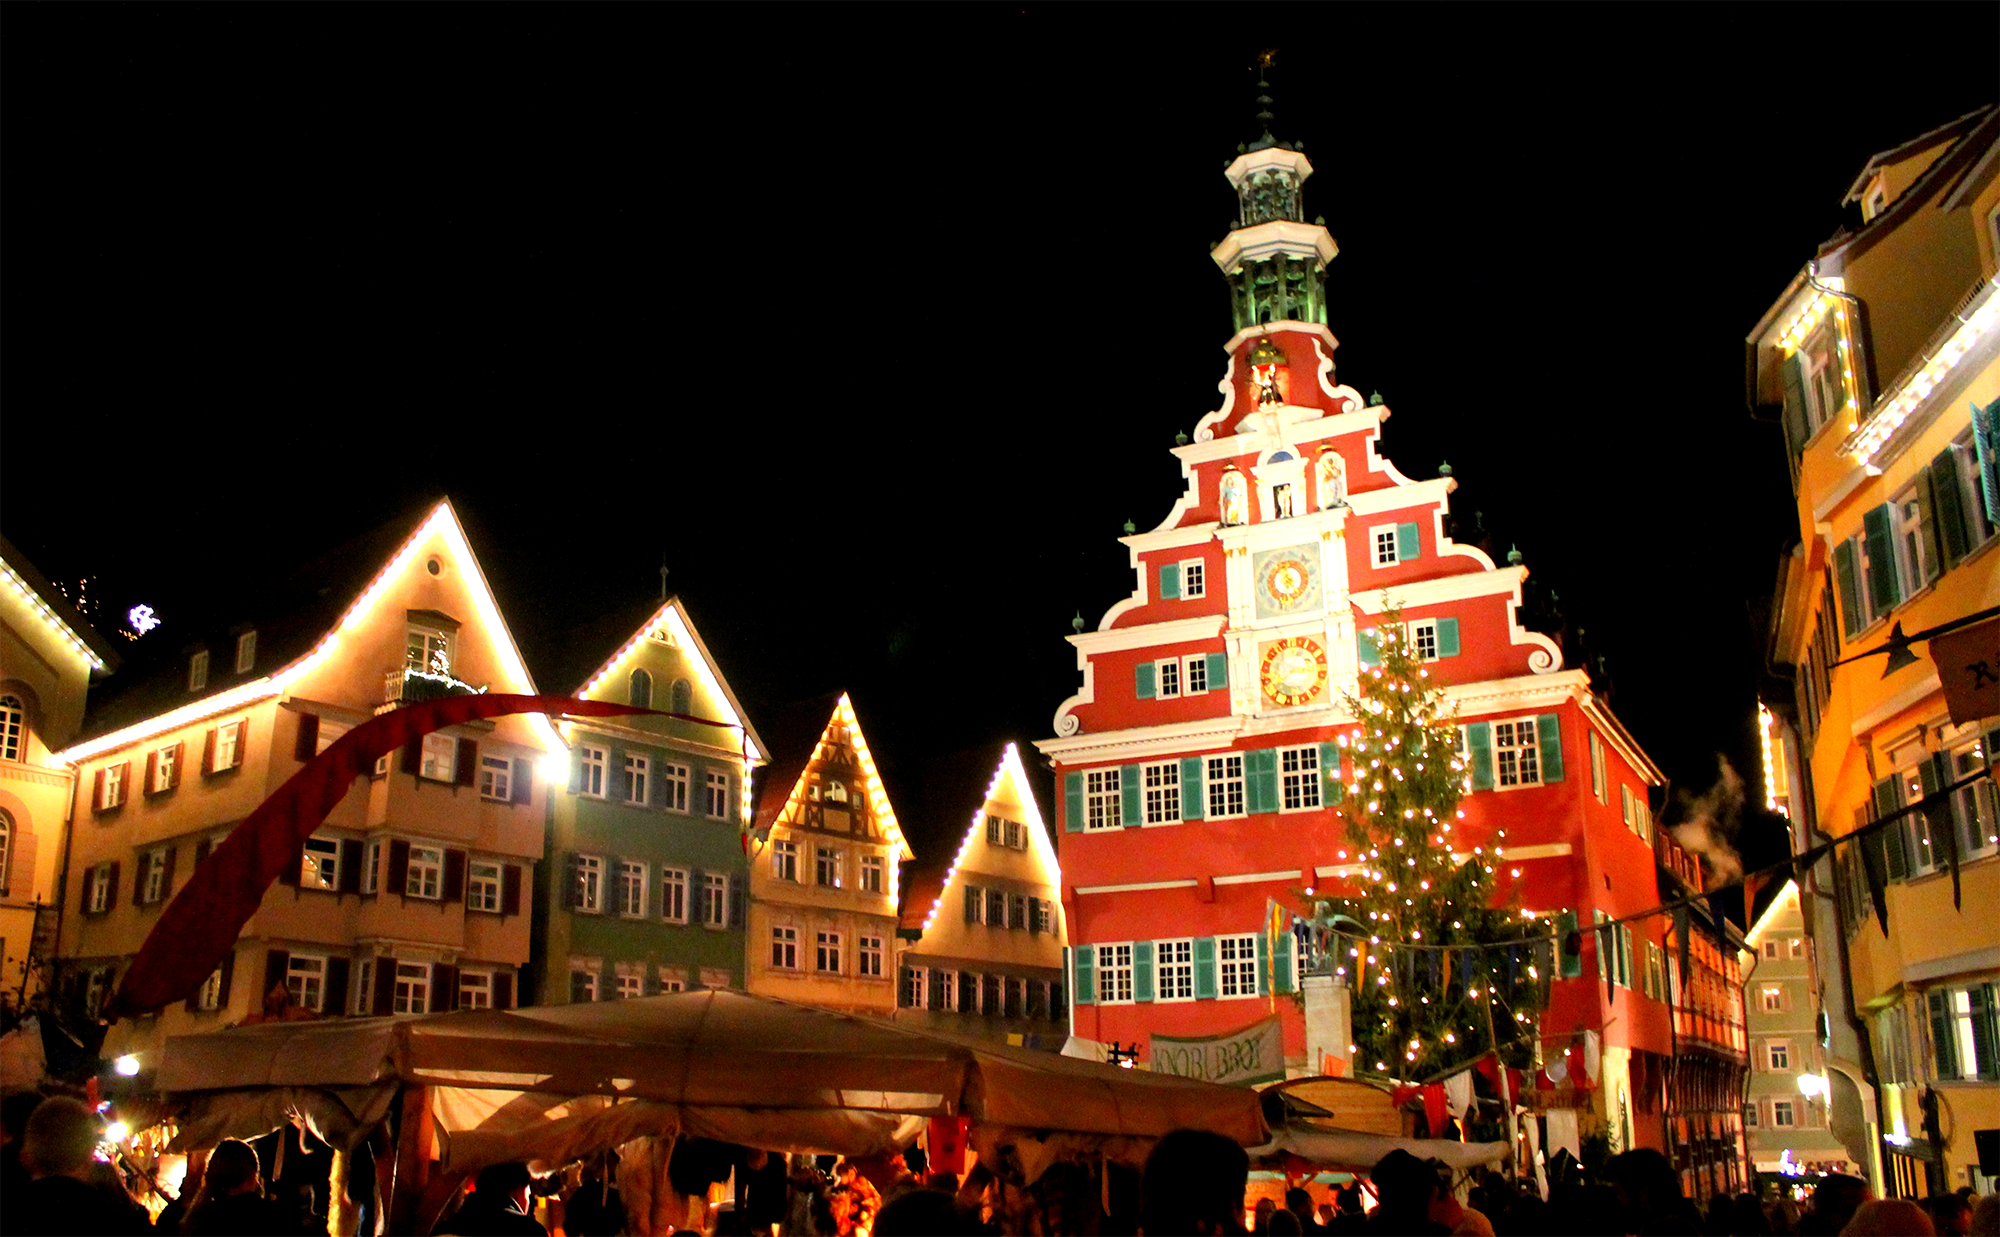 The Dreamy Esslingen Christmas Market - In Photos